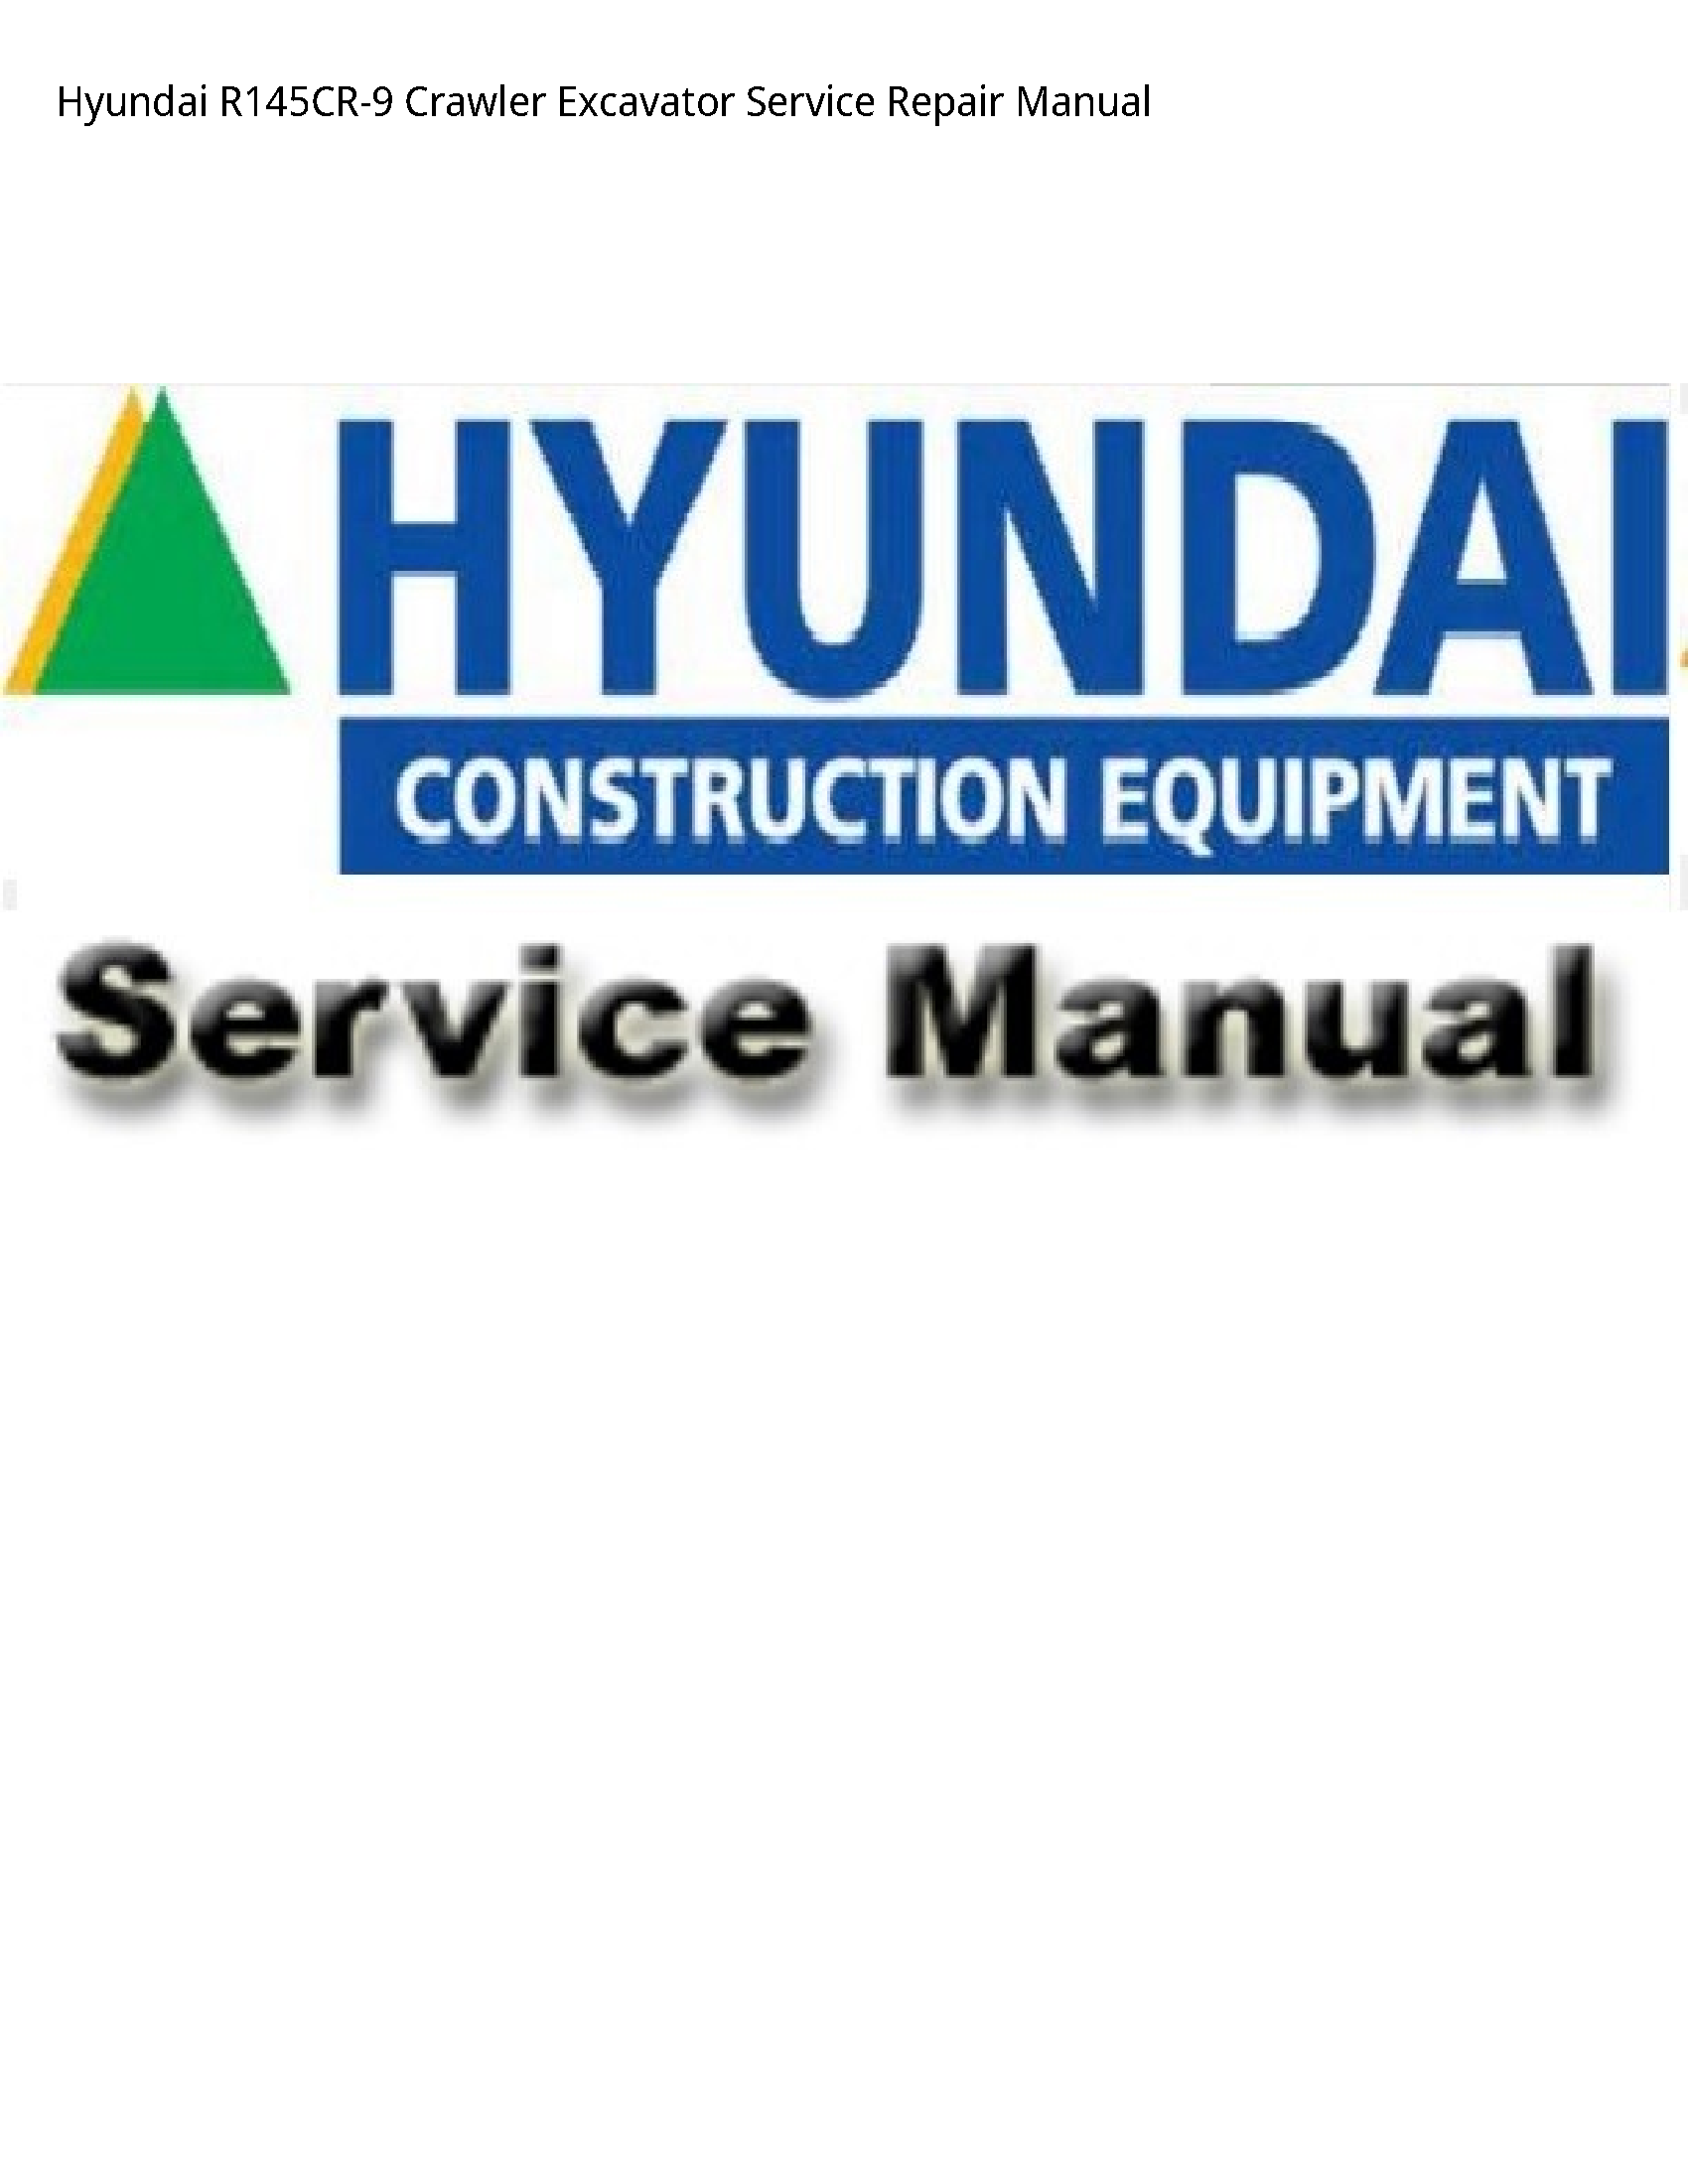 Hyundai R145CR-9 Crawler Excavator manual